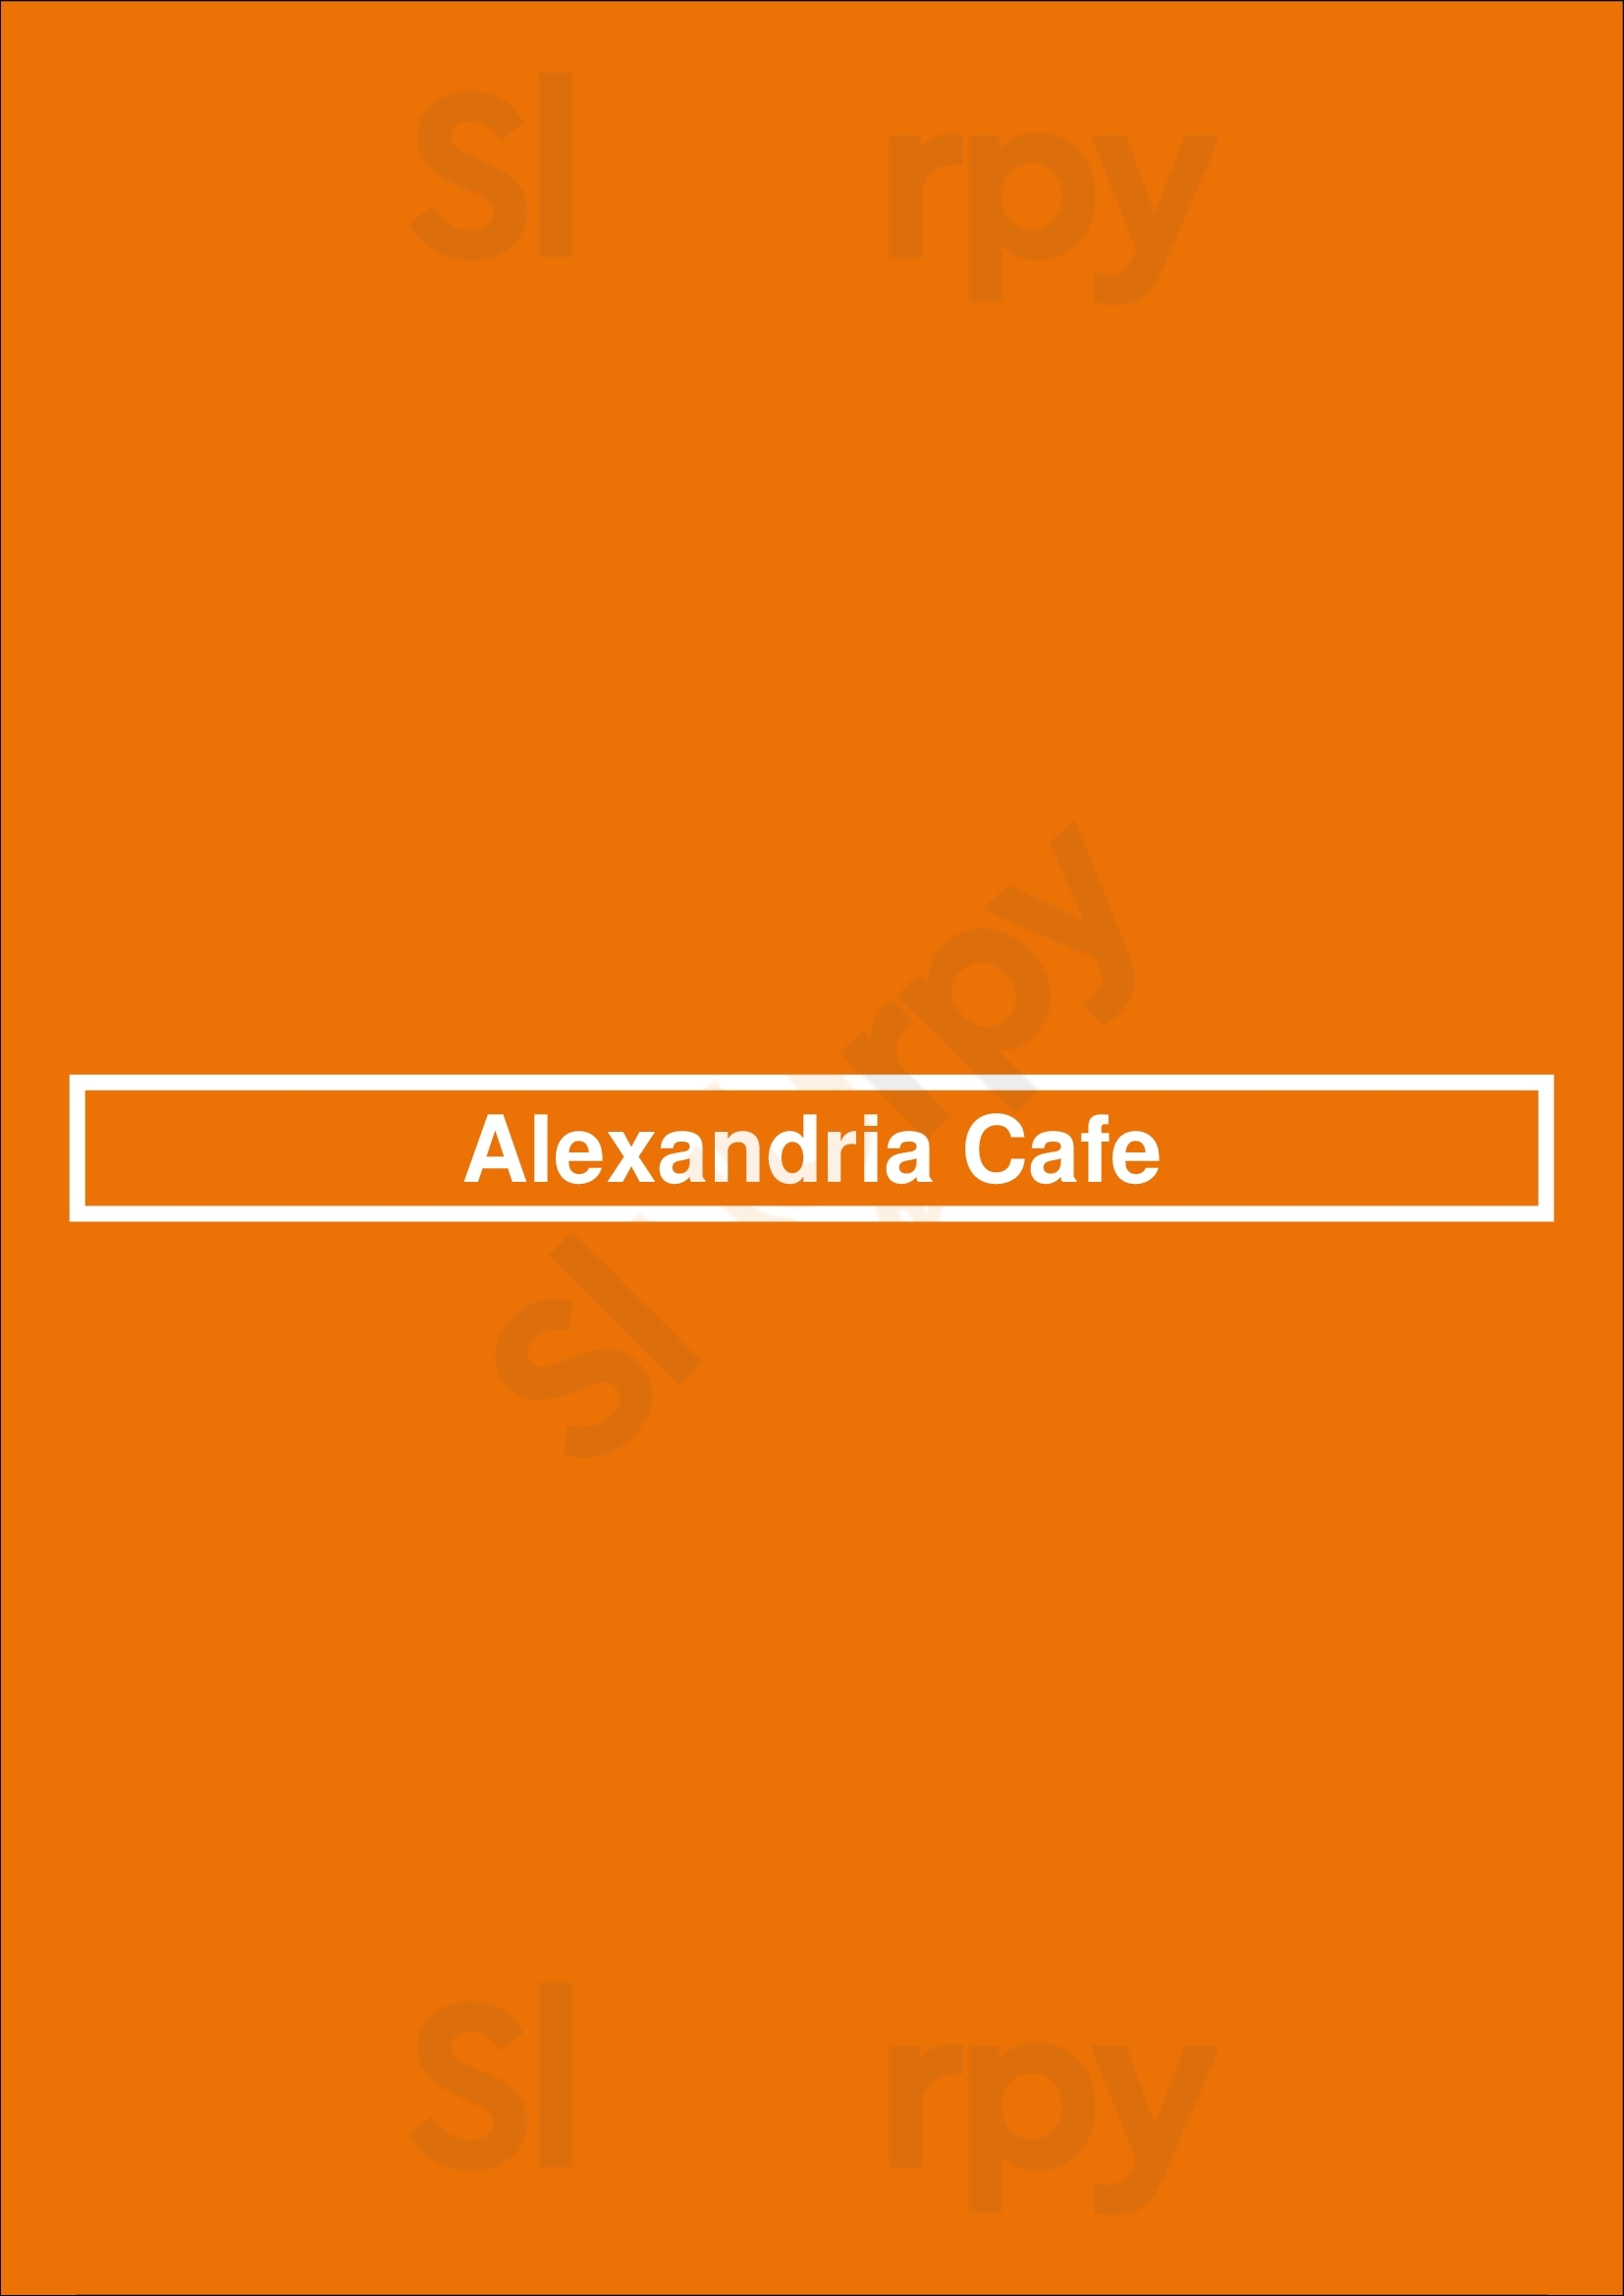 Alexandria Cafe Margate Menu - 1